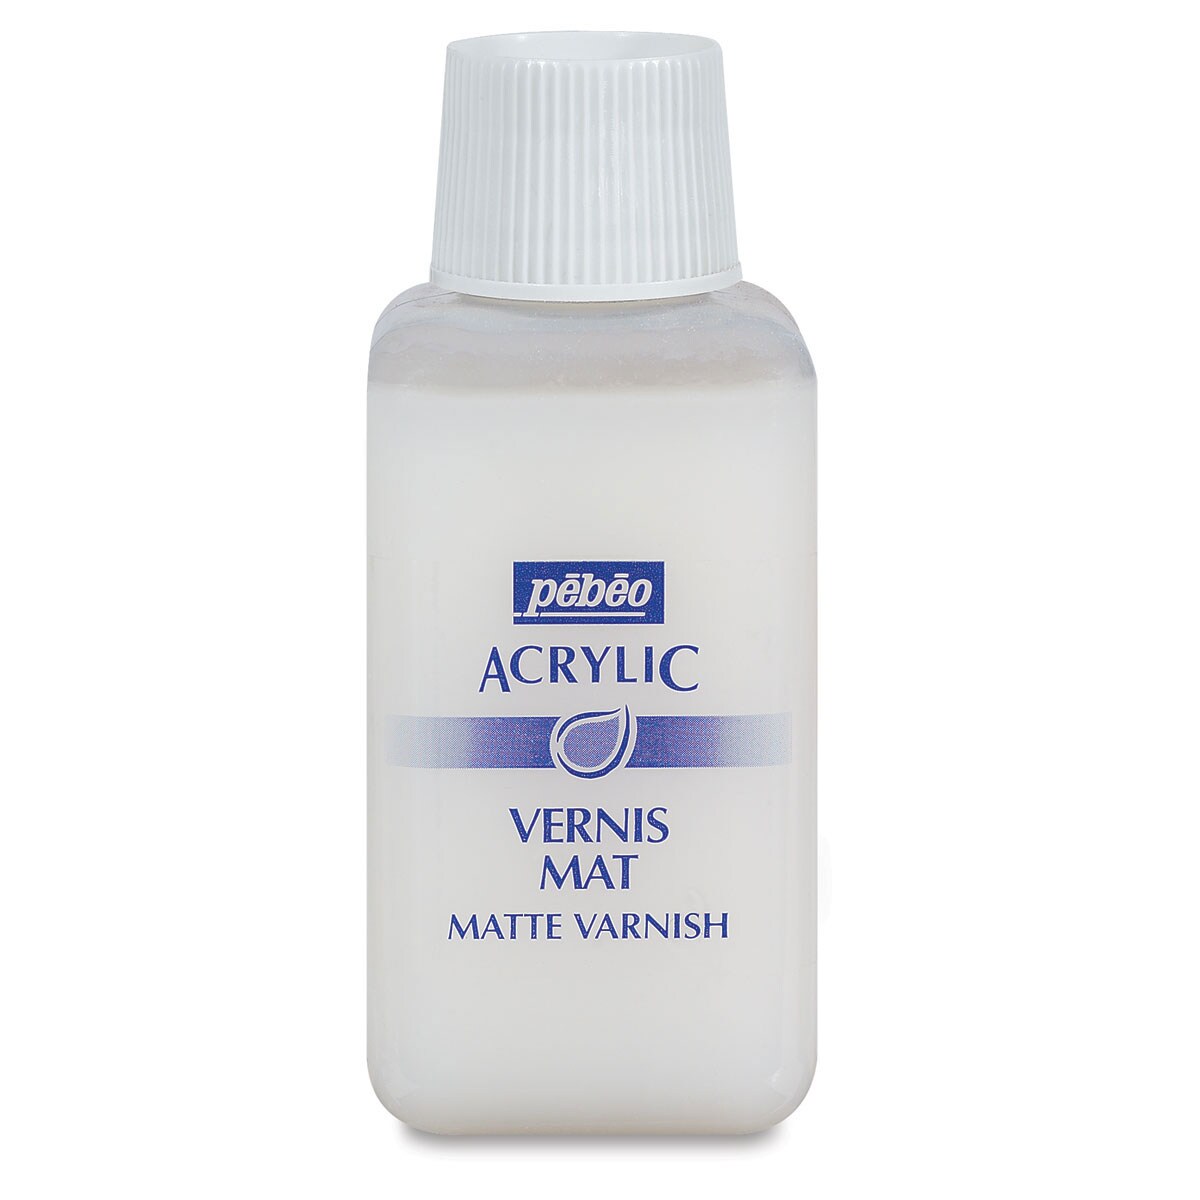 Pebeo Acrylic Polymer Varnish - Matte, 250 ml bottle